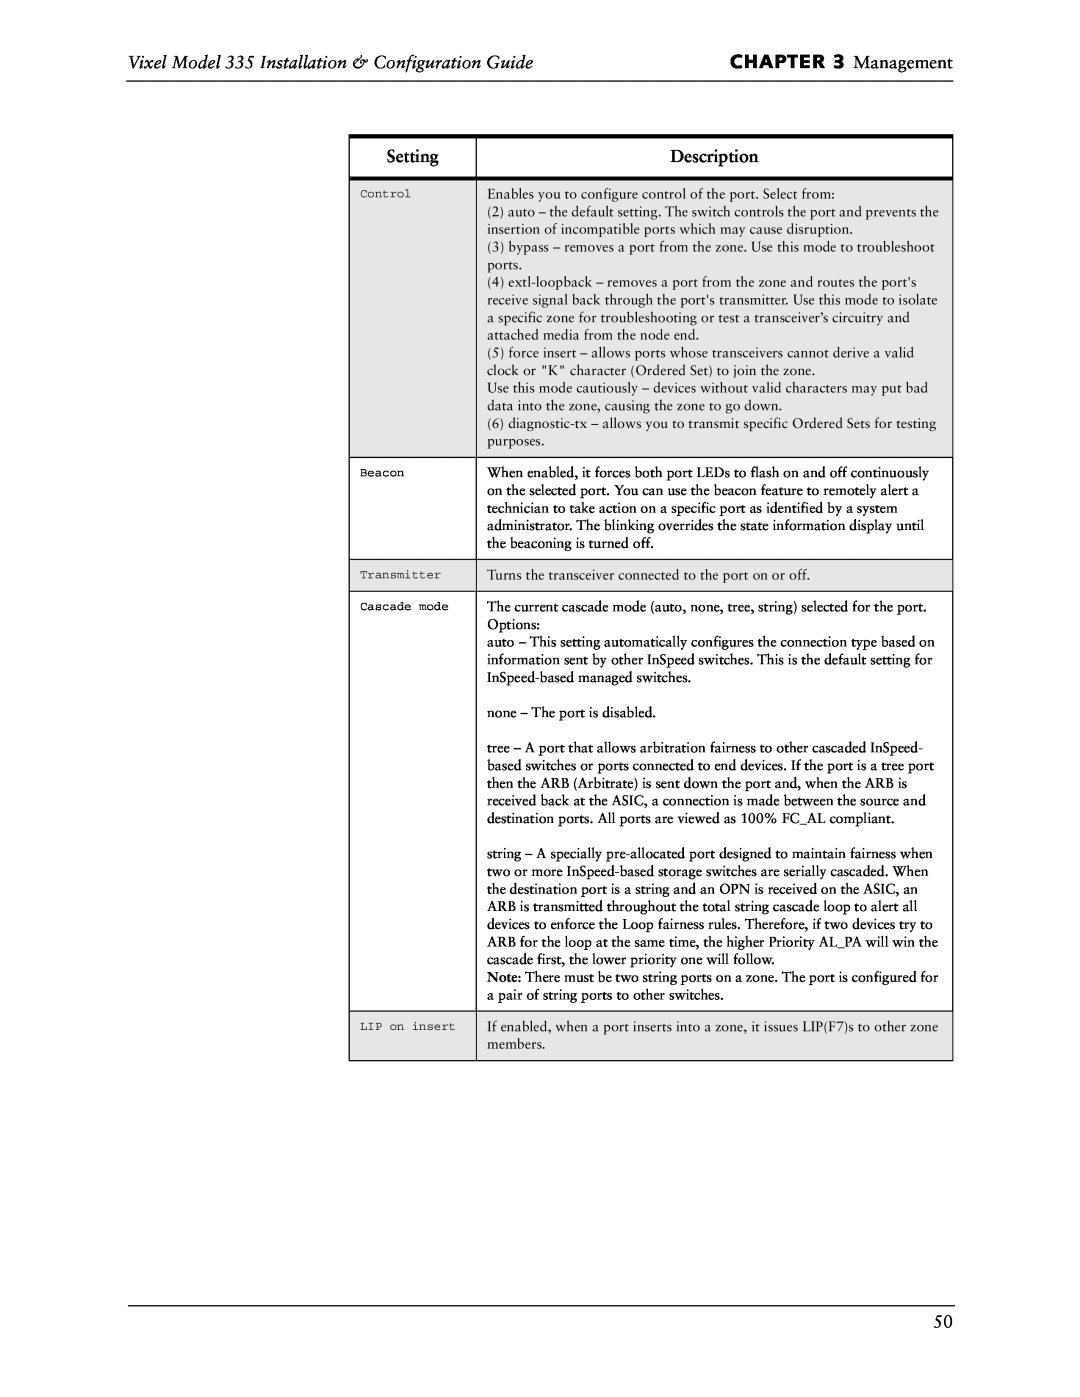 Vixel manual Management, Vixel Model 335 Installation & Configuration Guide, Setting, Description 